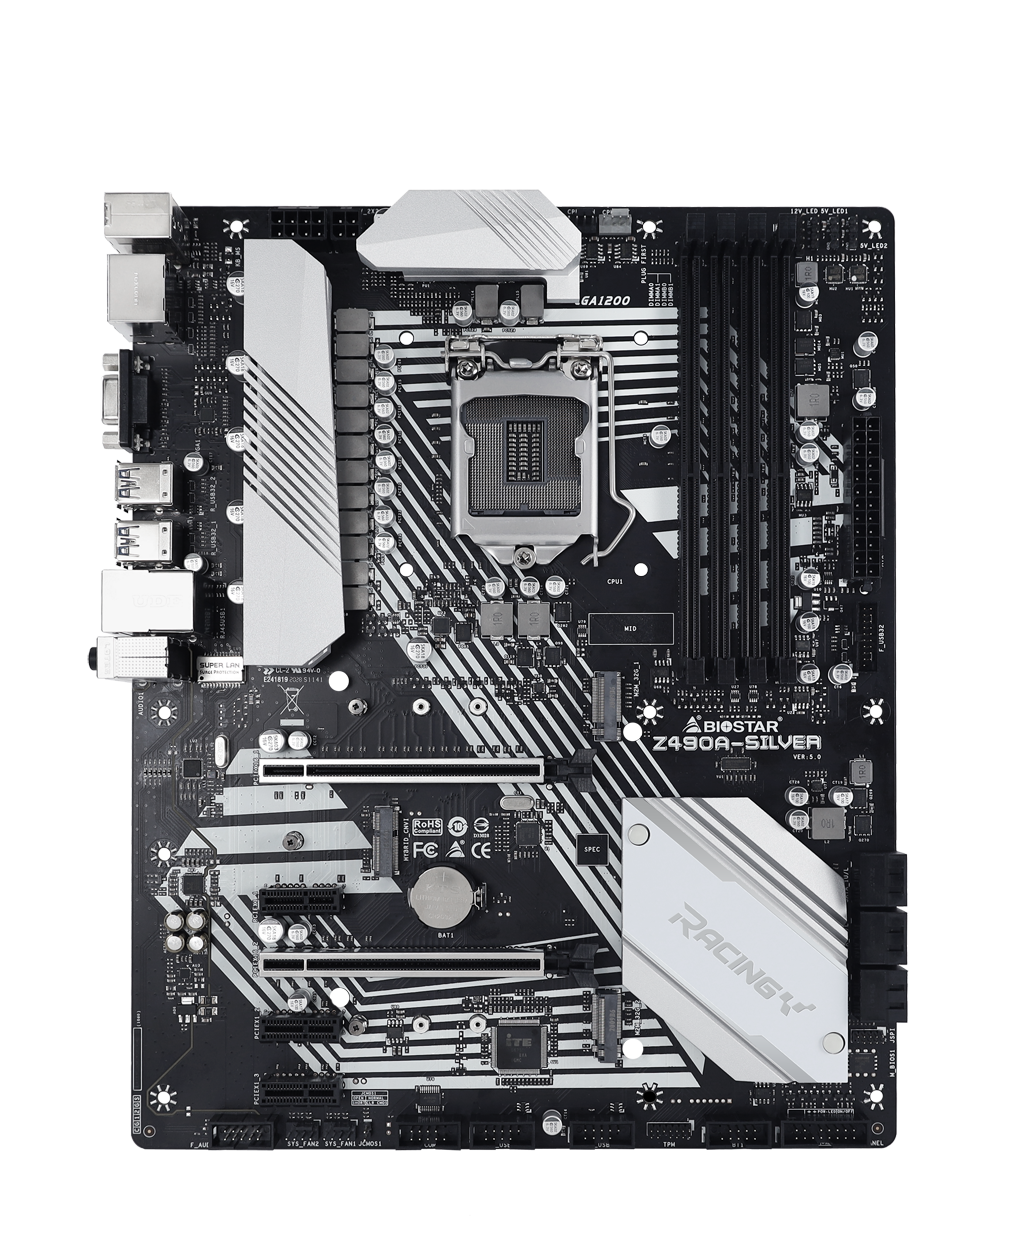 Z490A-SILVER INTEL Socket 1200 gaming motherboard